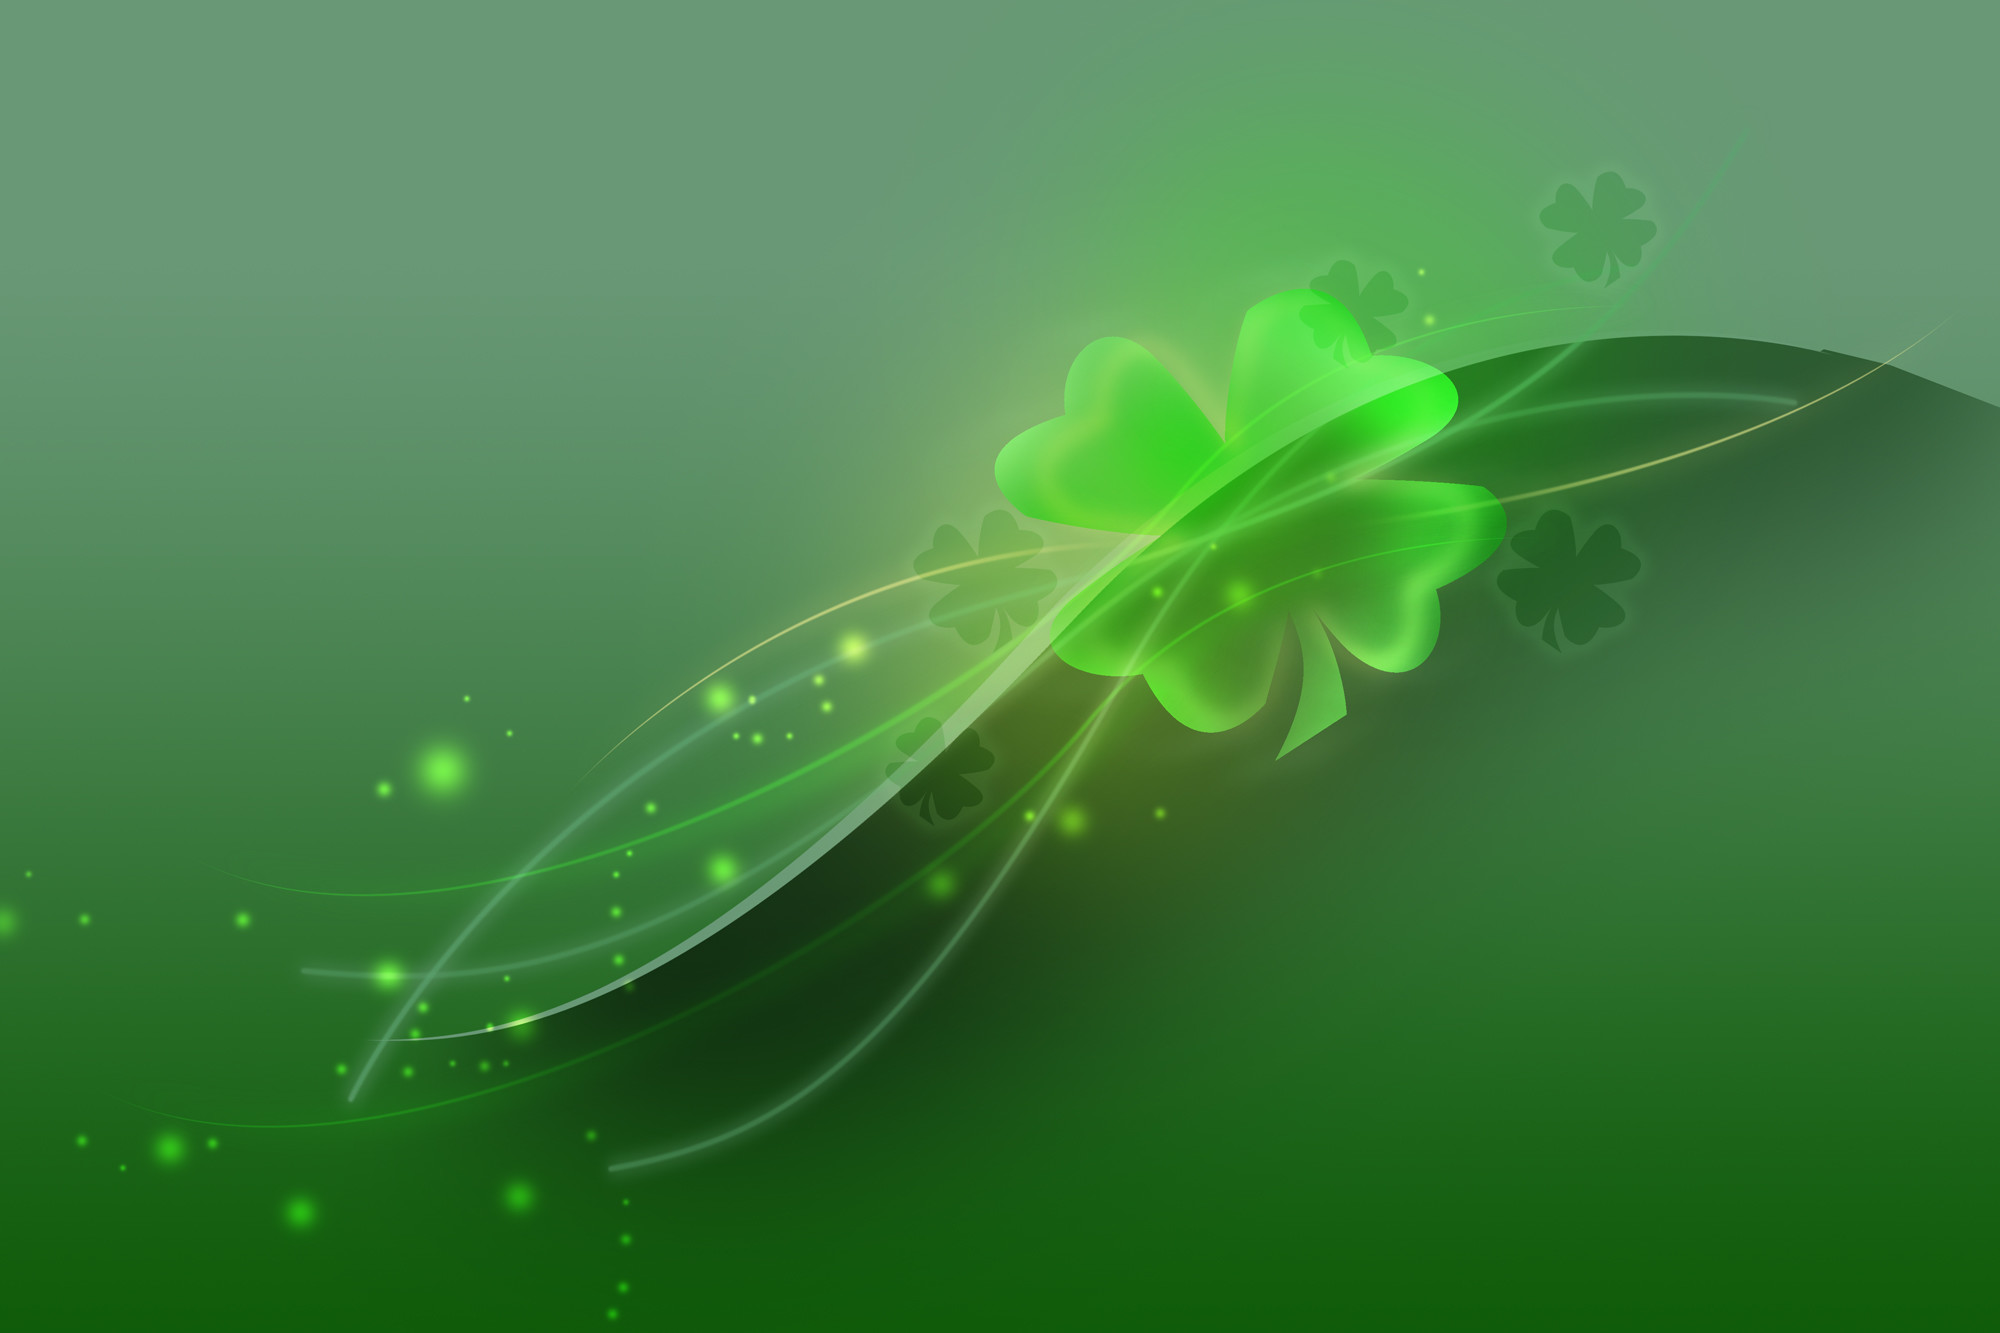 2000x1333 Explore Irish Proverbs, Saint Patrick's Day, and more!